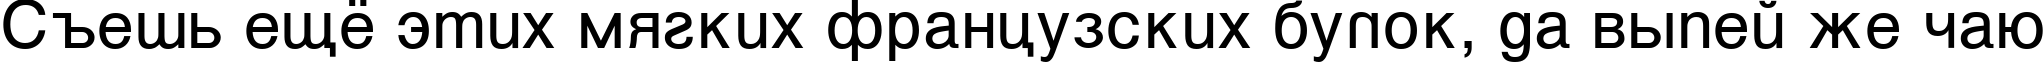 Пример написания шрифтом VantaPlain текста на русском